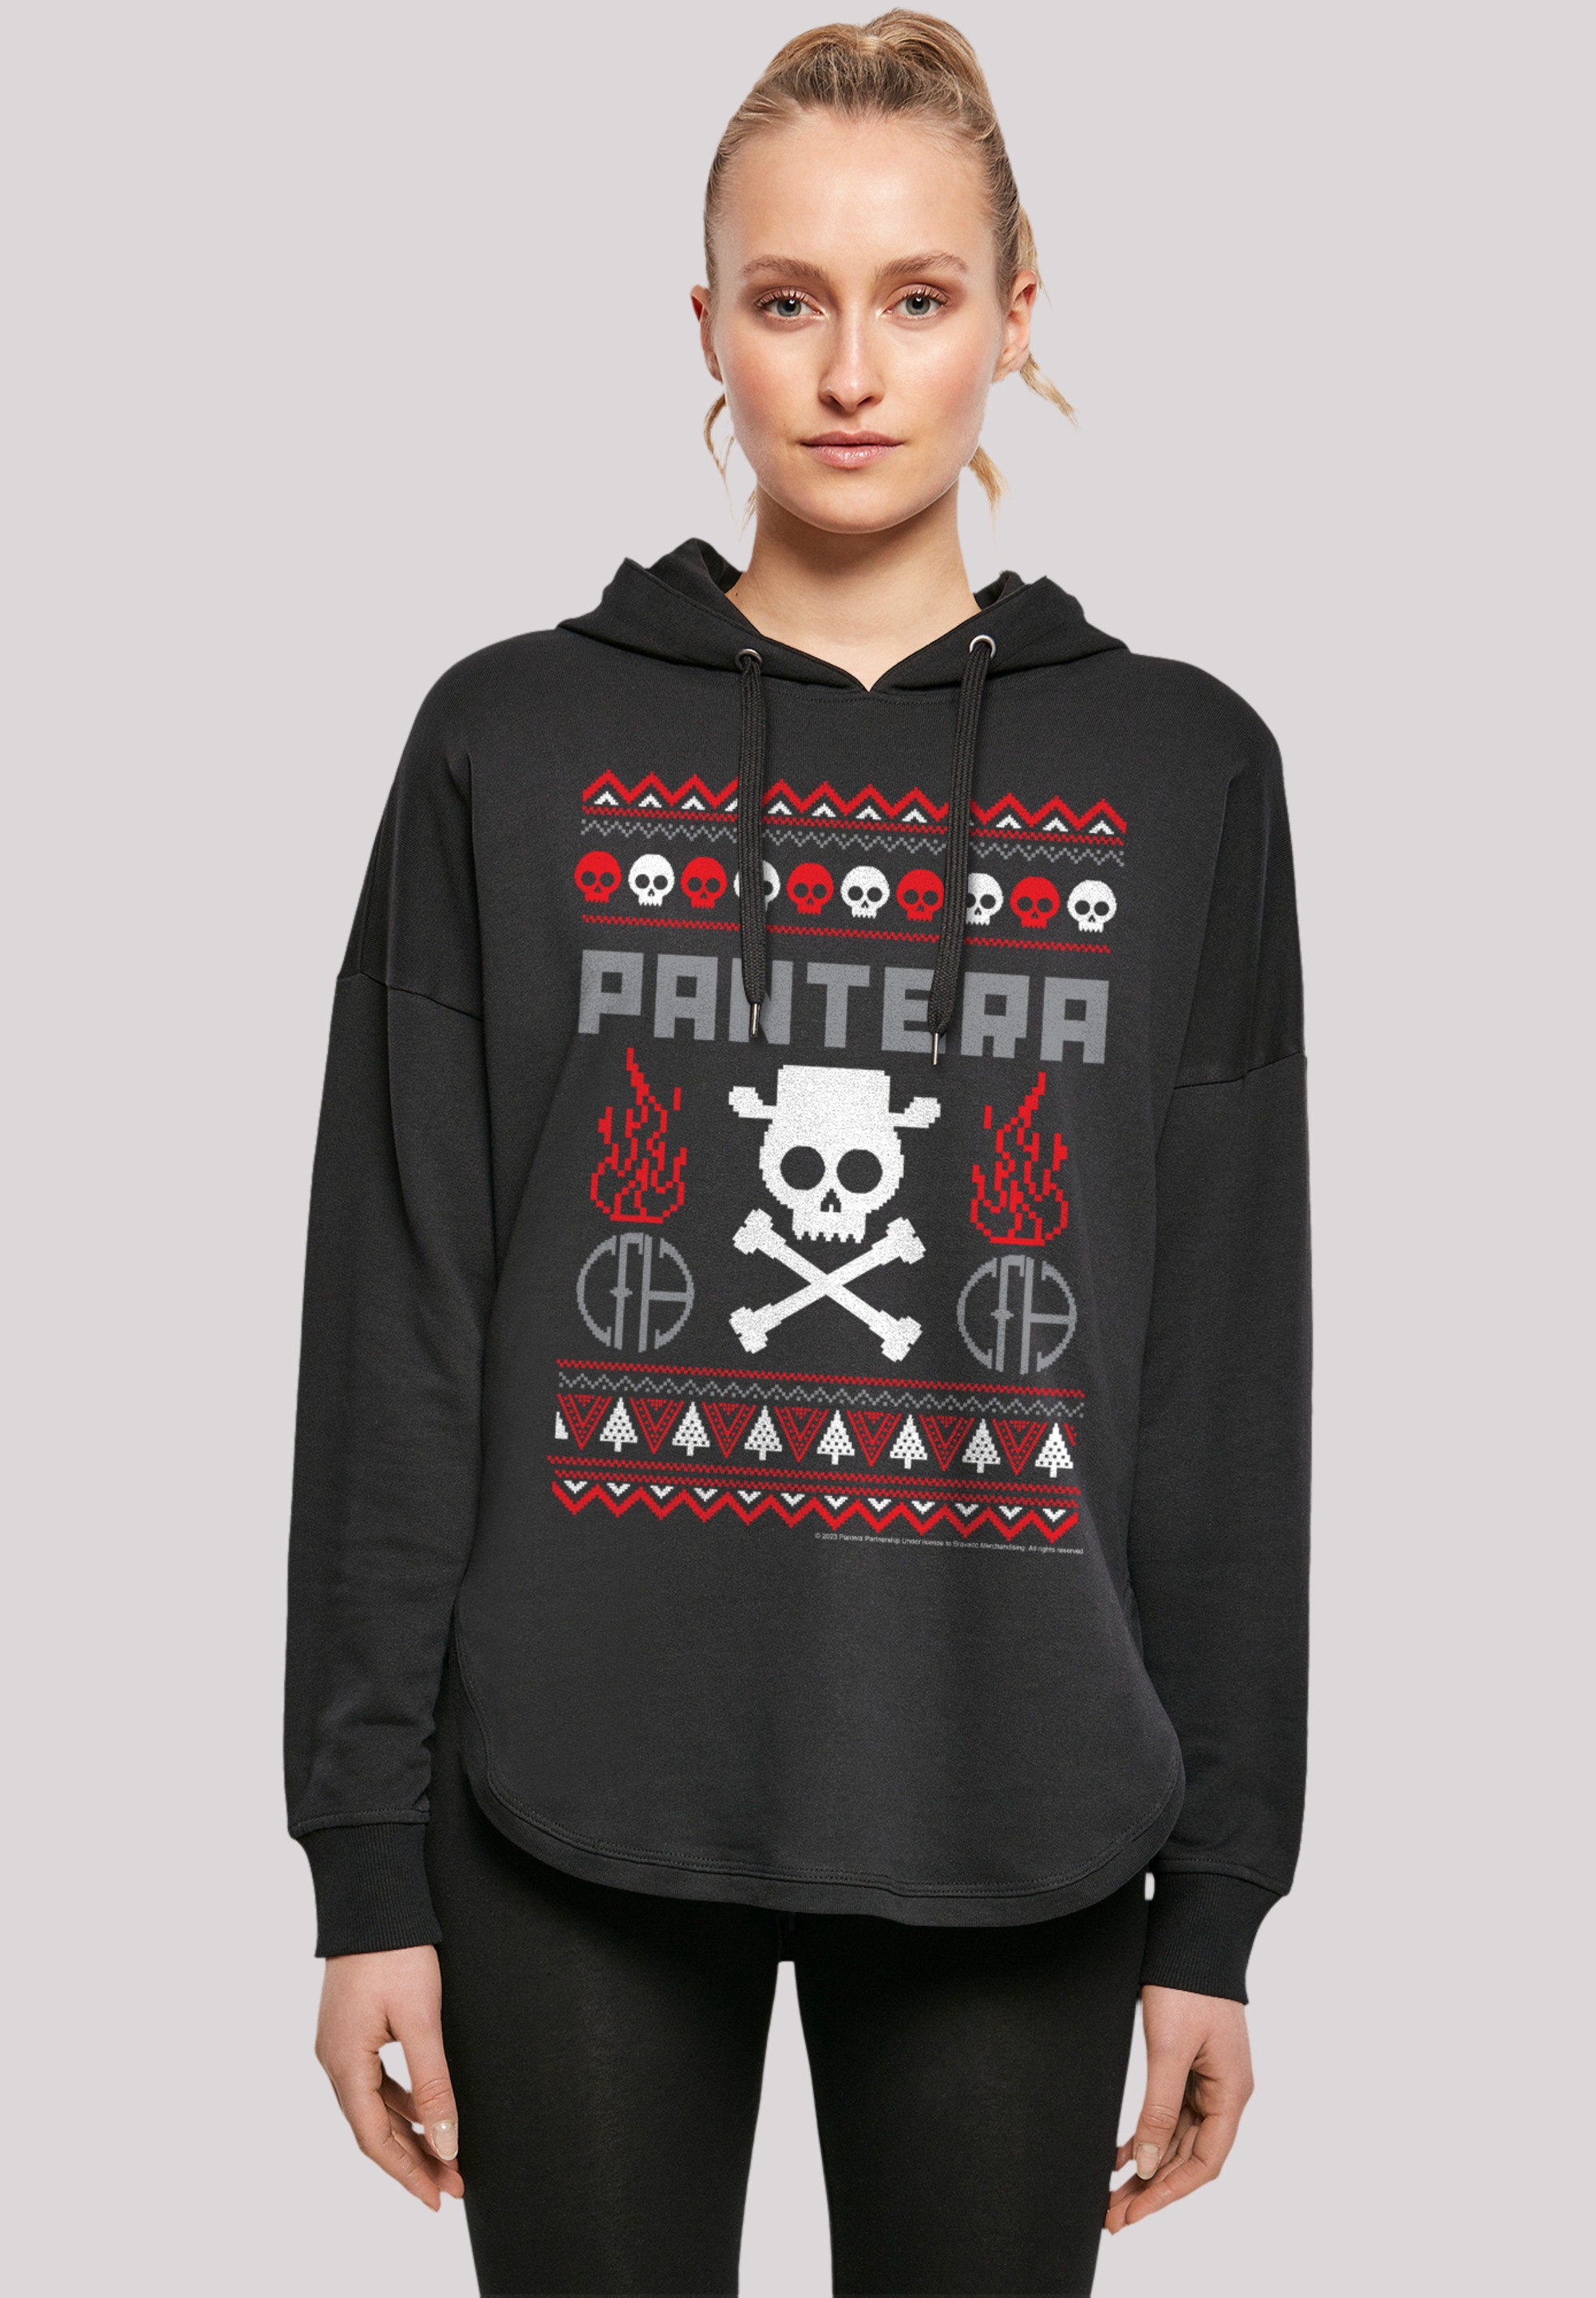 Band, Christmas«, Weihnachten »Pantera Sweatshirt | Logo Musik, F4NT4STIC walking I\'m kaufen online